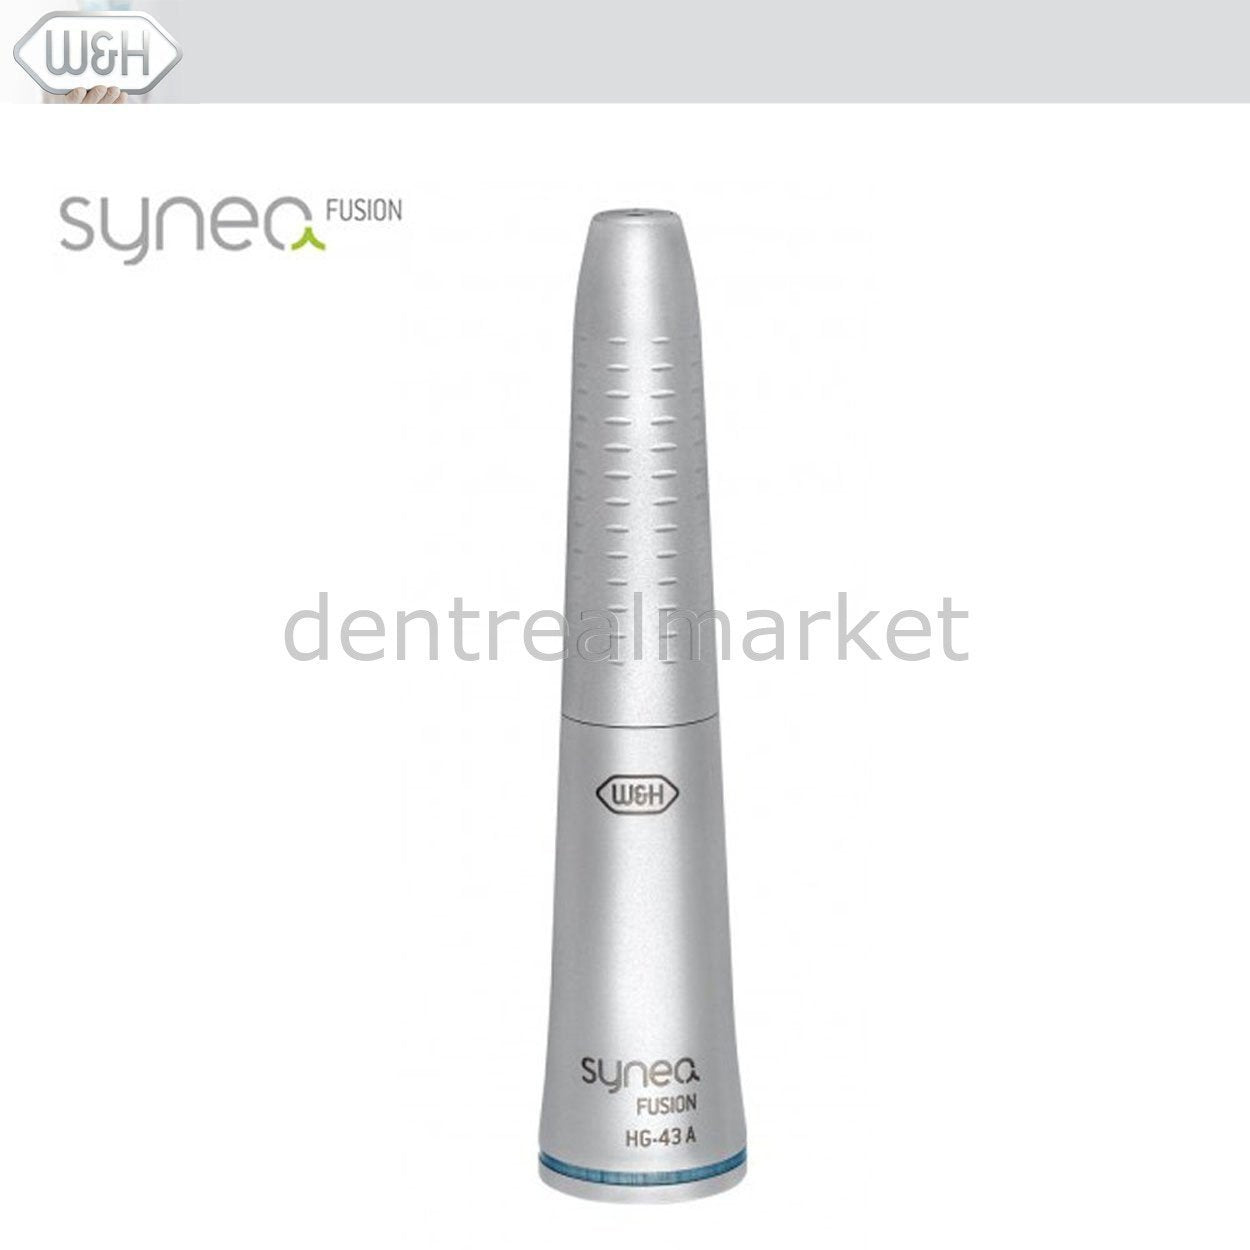 DentrealStore - W&H Dental Synea Fusion HG-43 A 1:1 Straight Handpiece